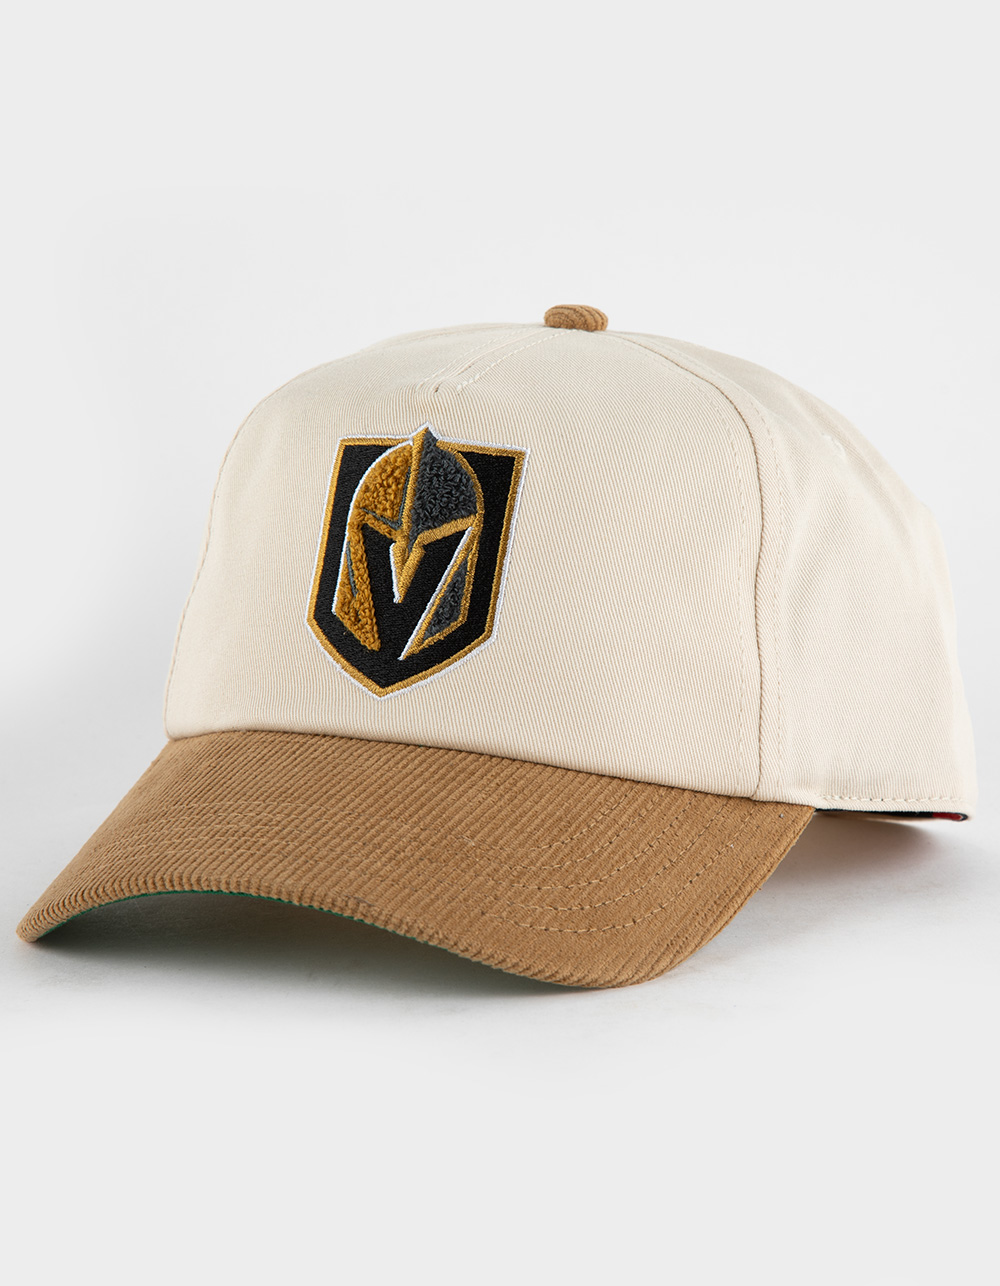 AMERICAN NEEDLE Las Vegas Golden Knights Burnett NHL Snapback Hat